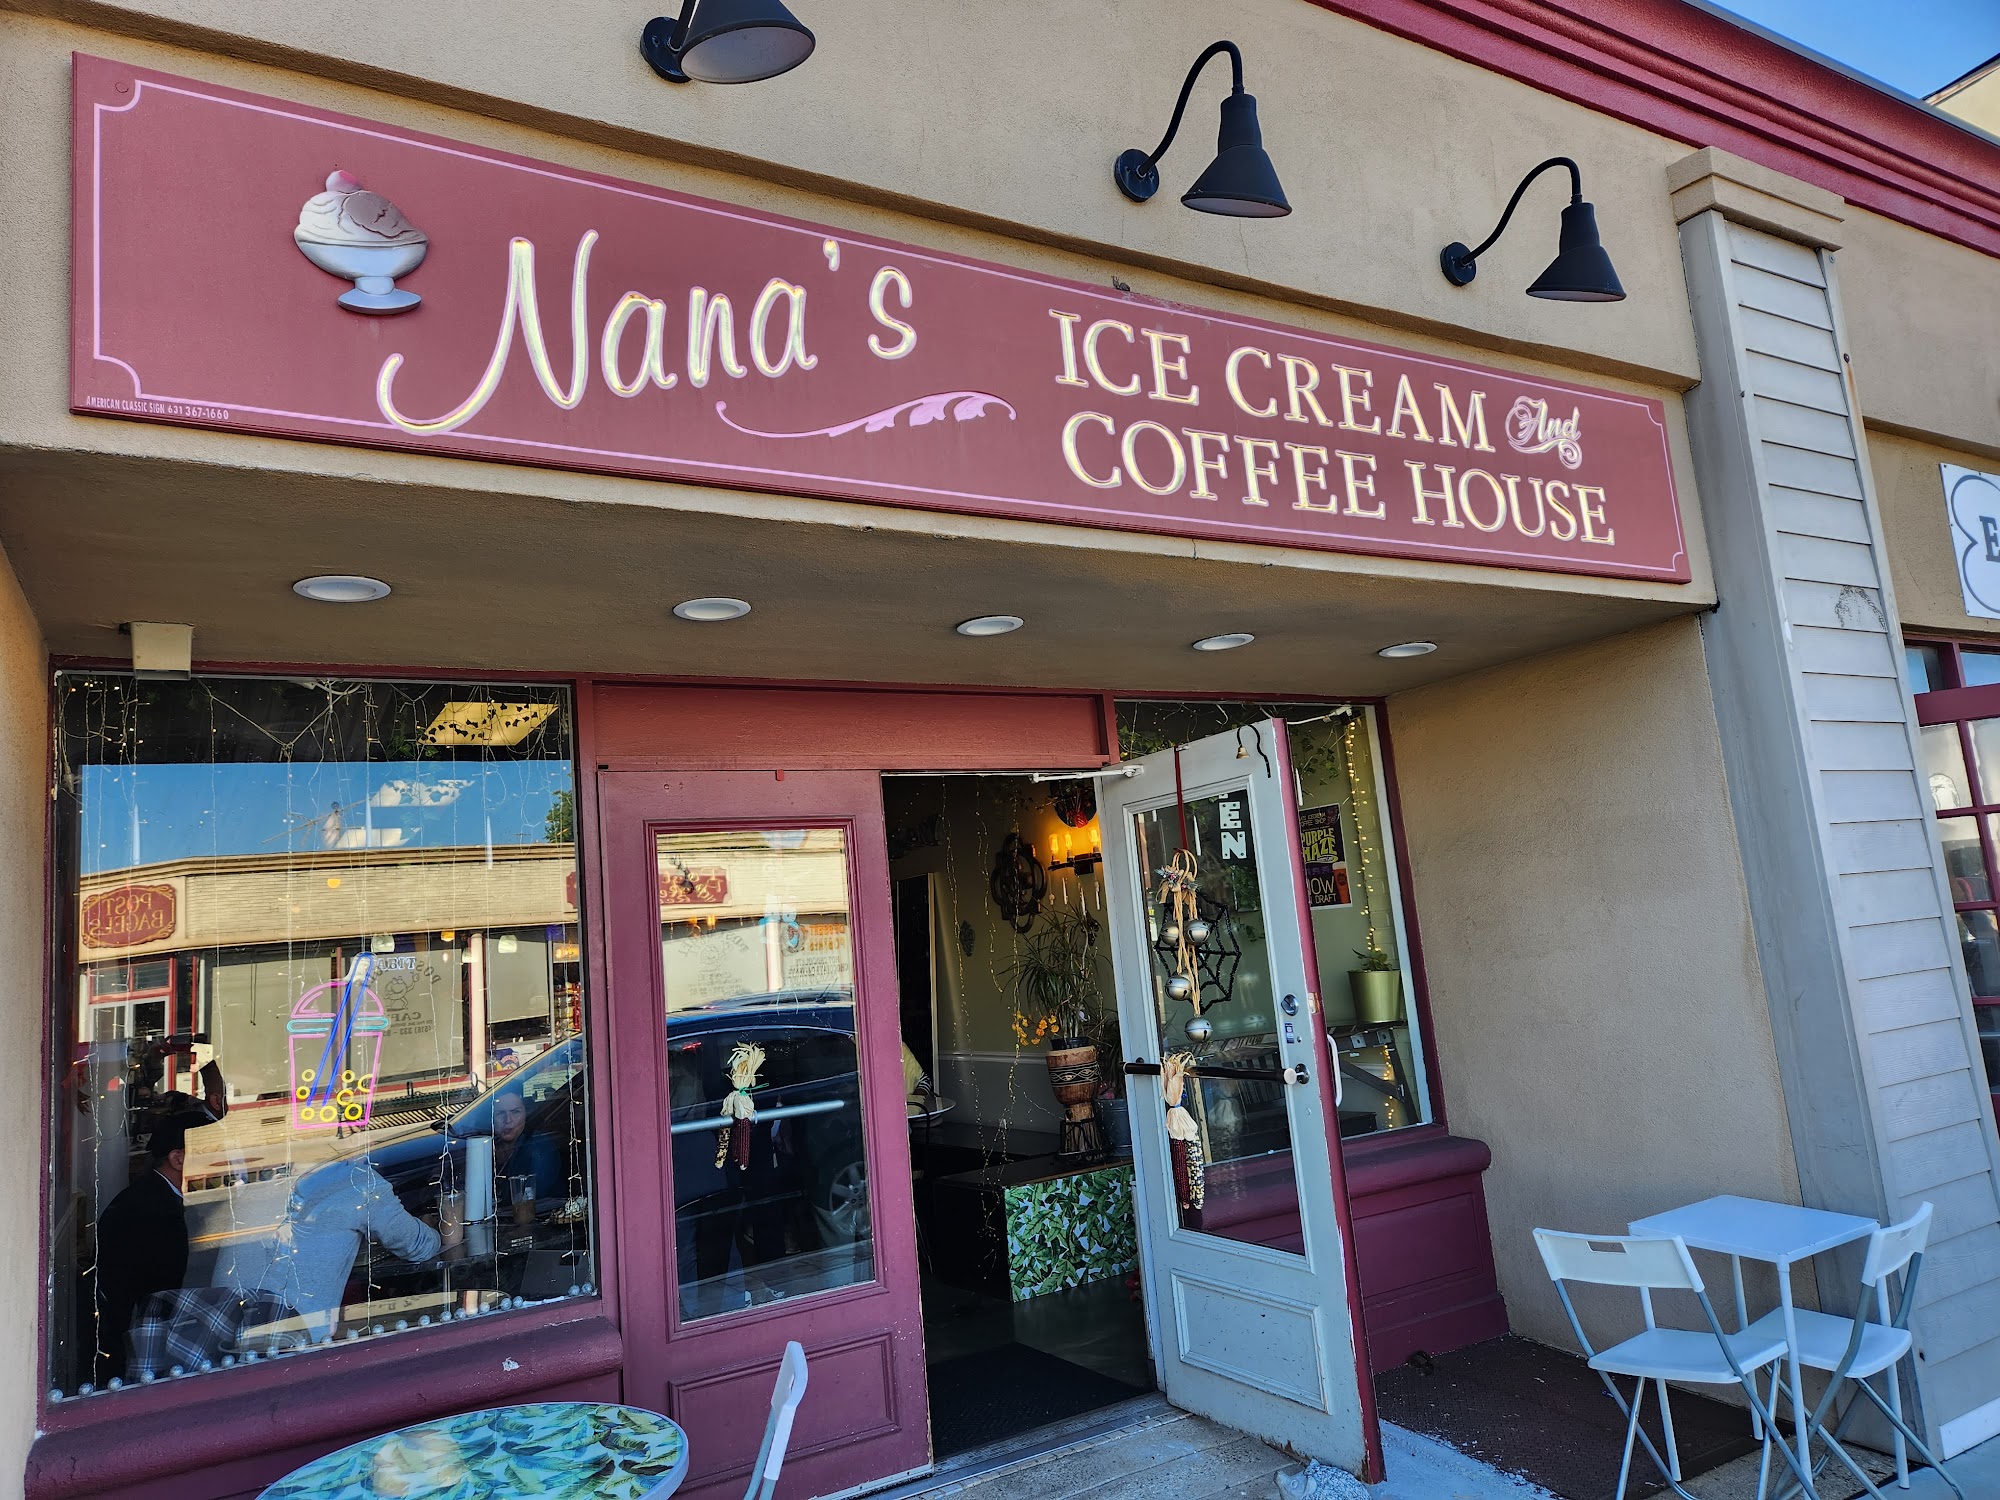 Nana's Ice Cream and Coffee House